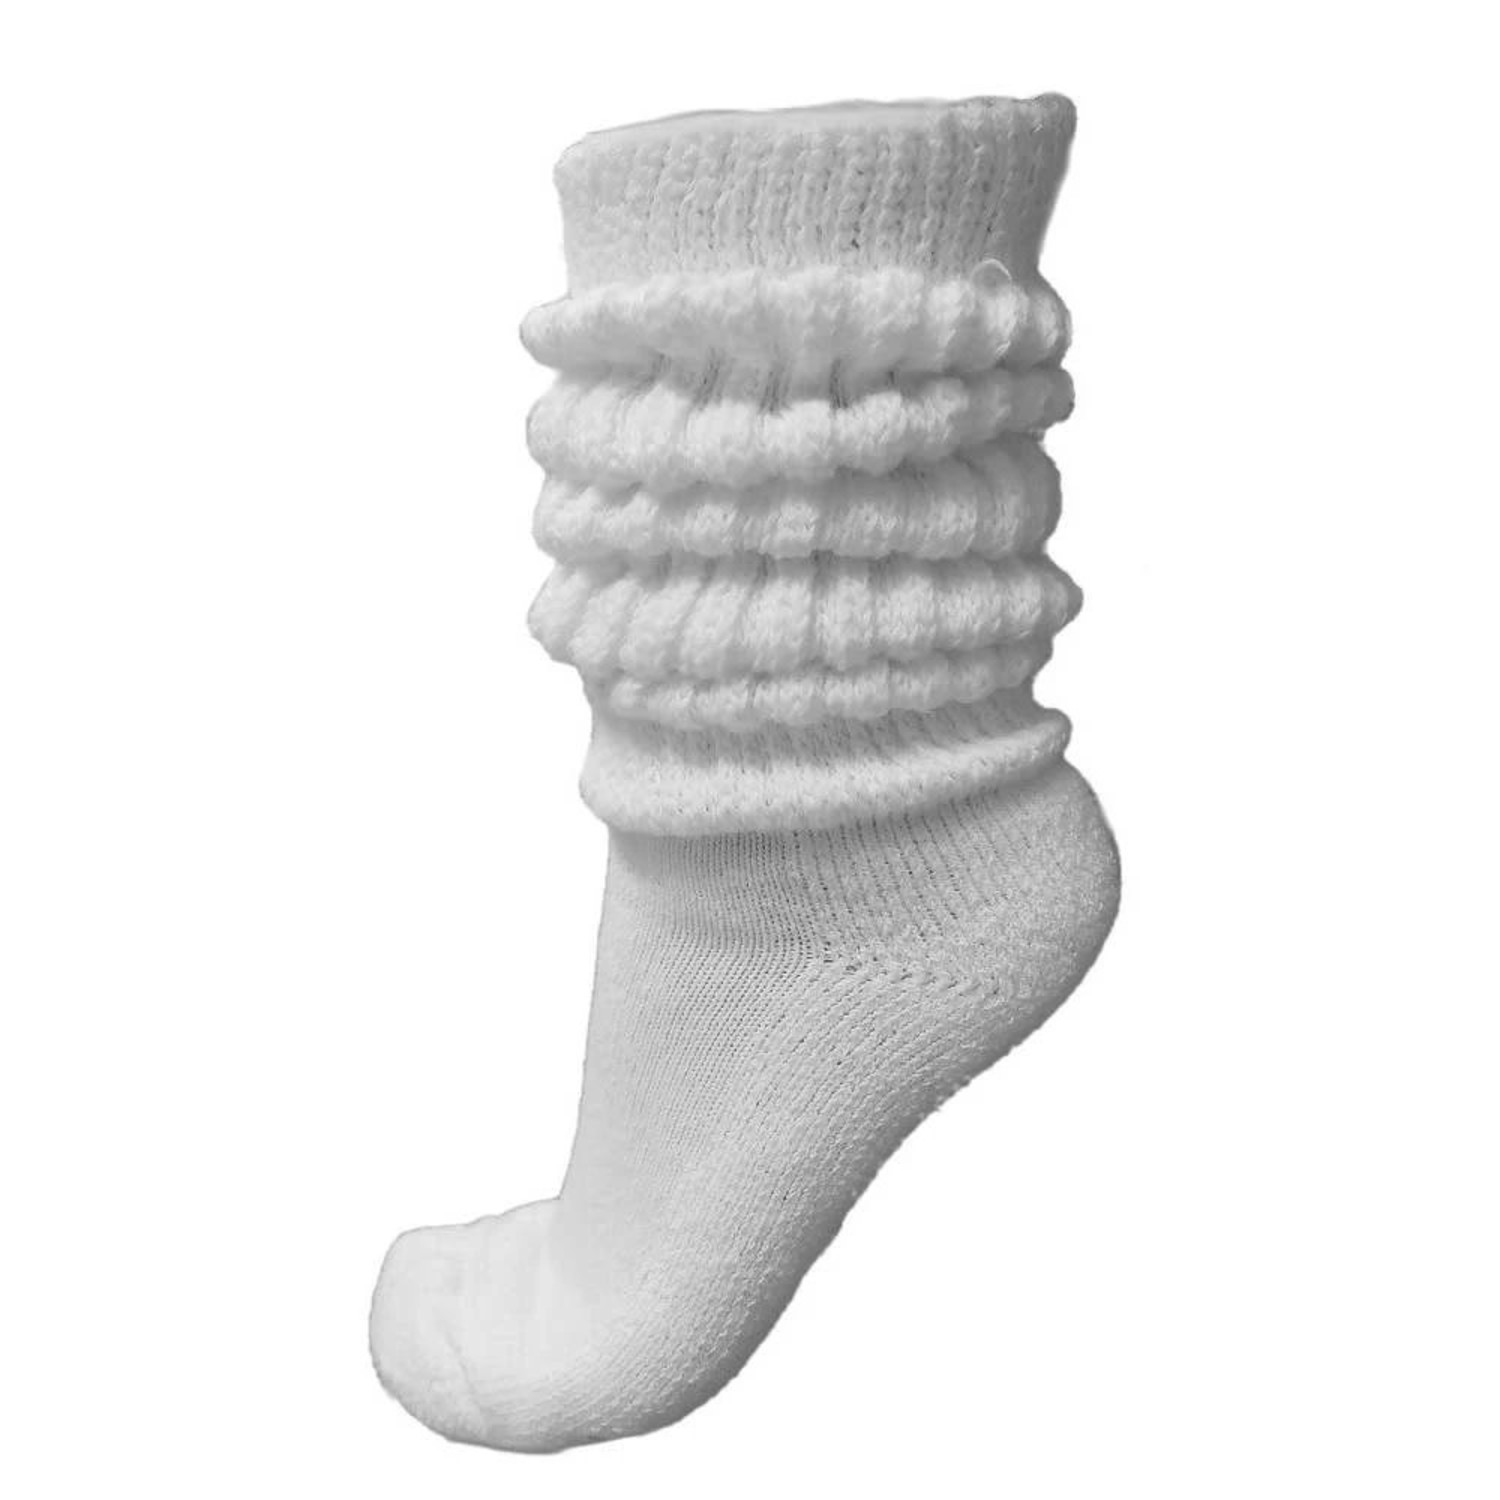 cozy socks - Marmalade